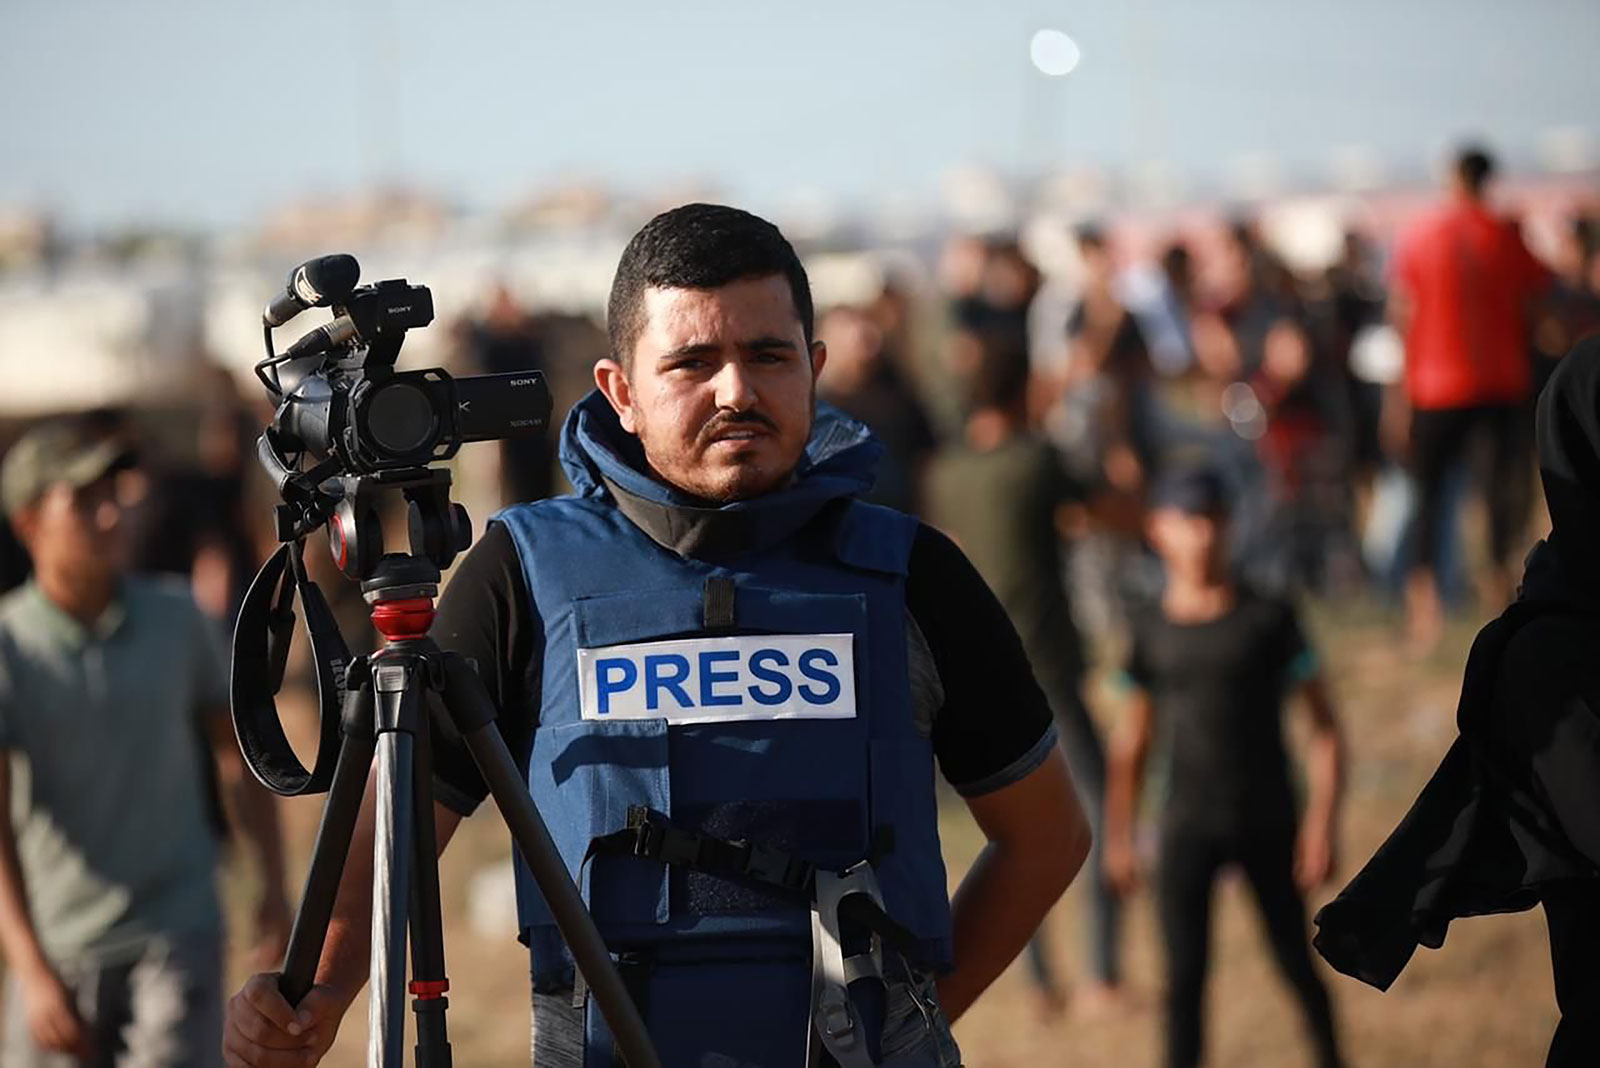 Montaser Al-Sawaf was a freelance cameraman based in the Gaza Strip.